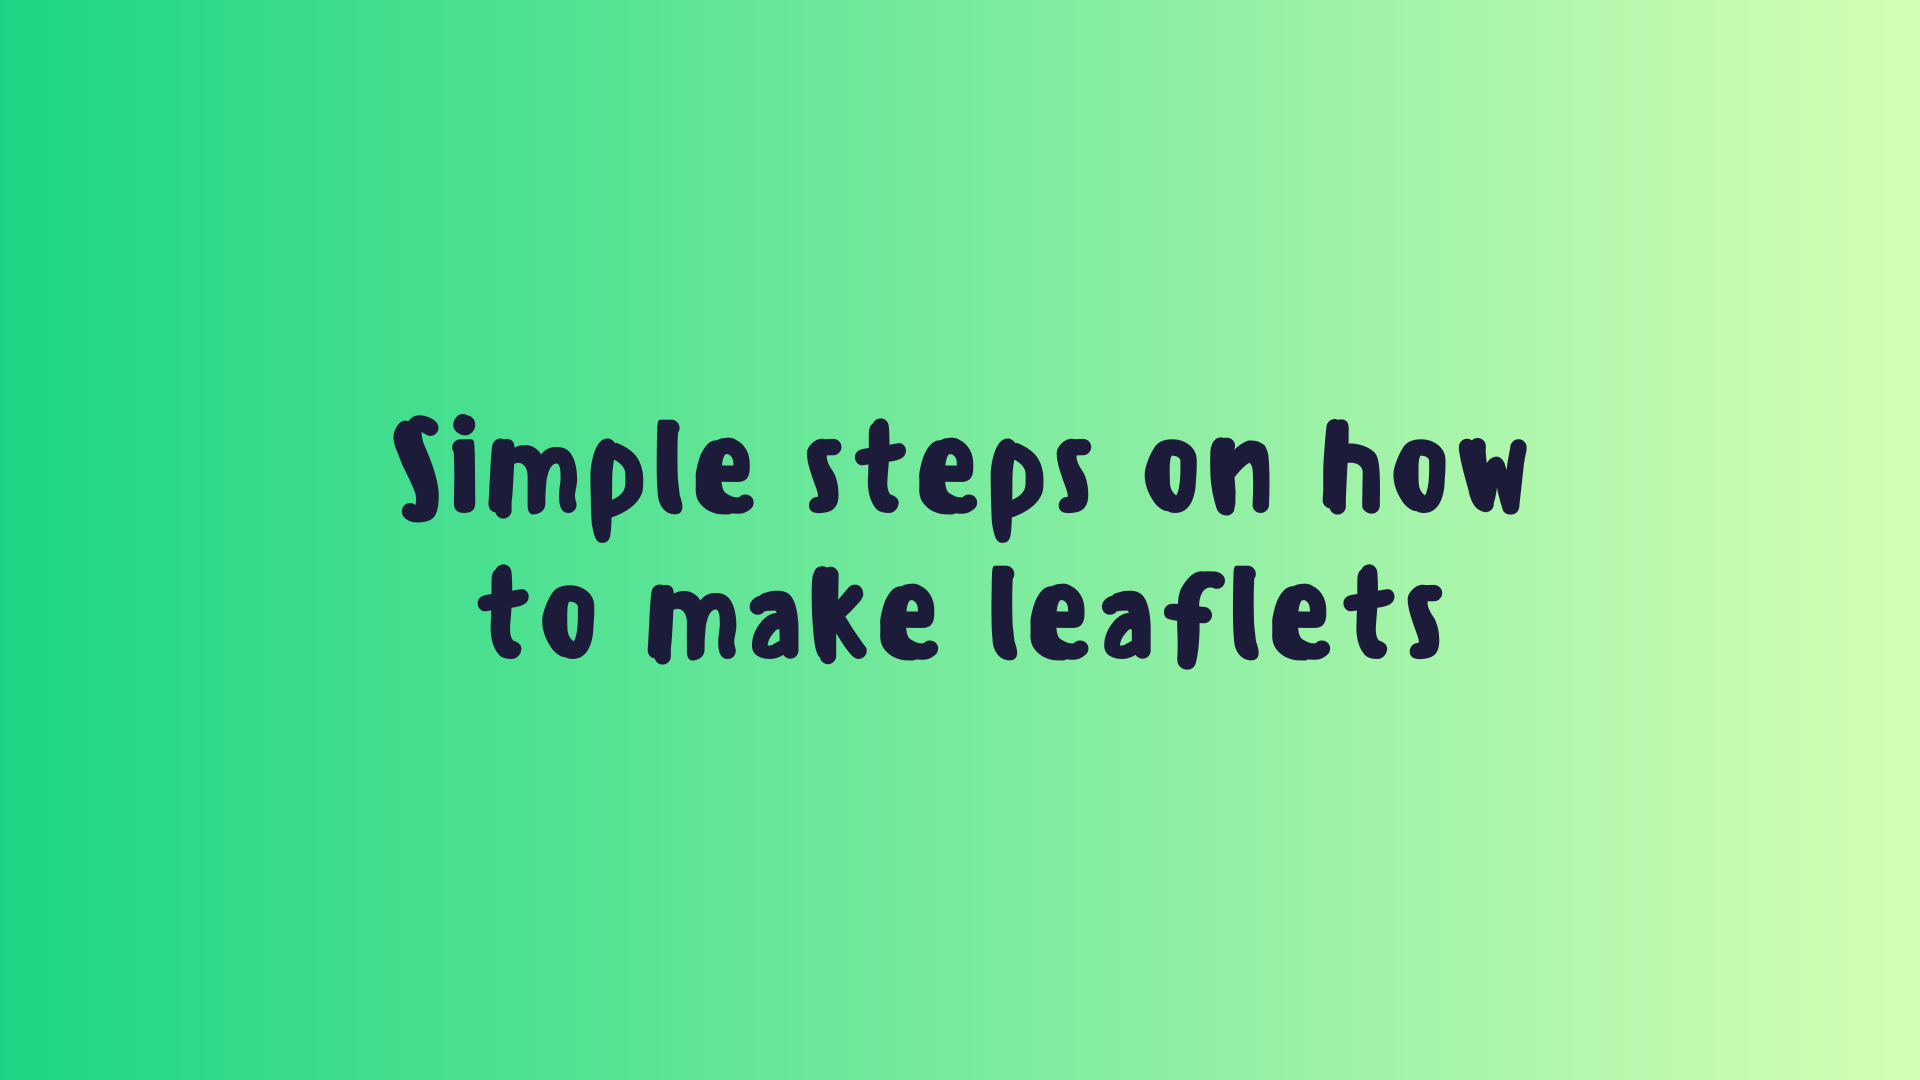 Simple steps on how to make leaflets